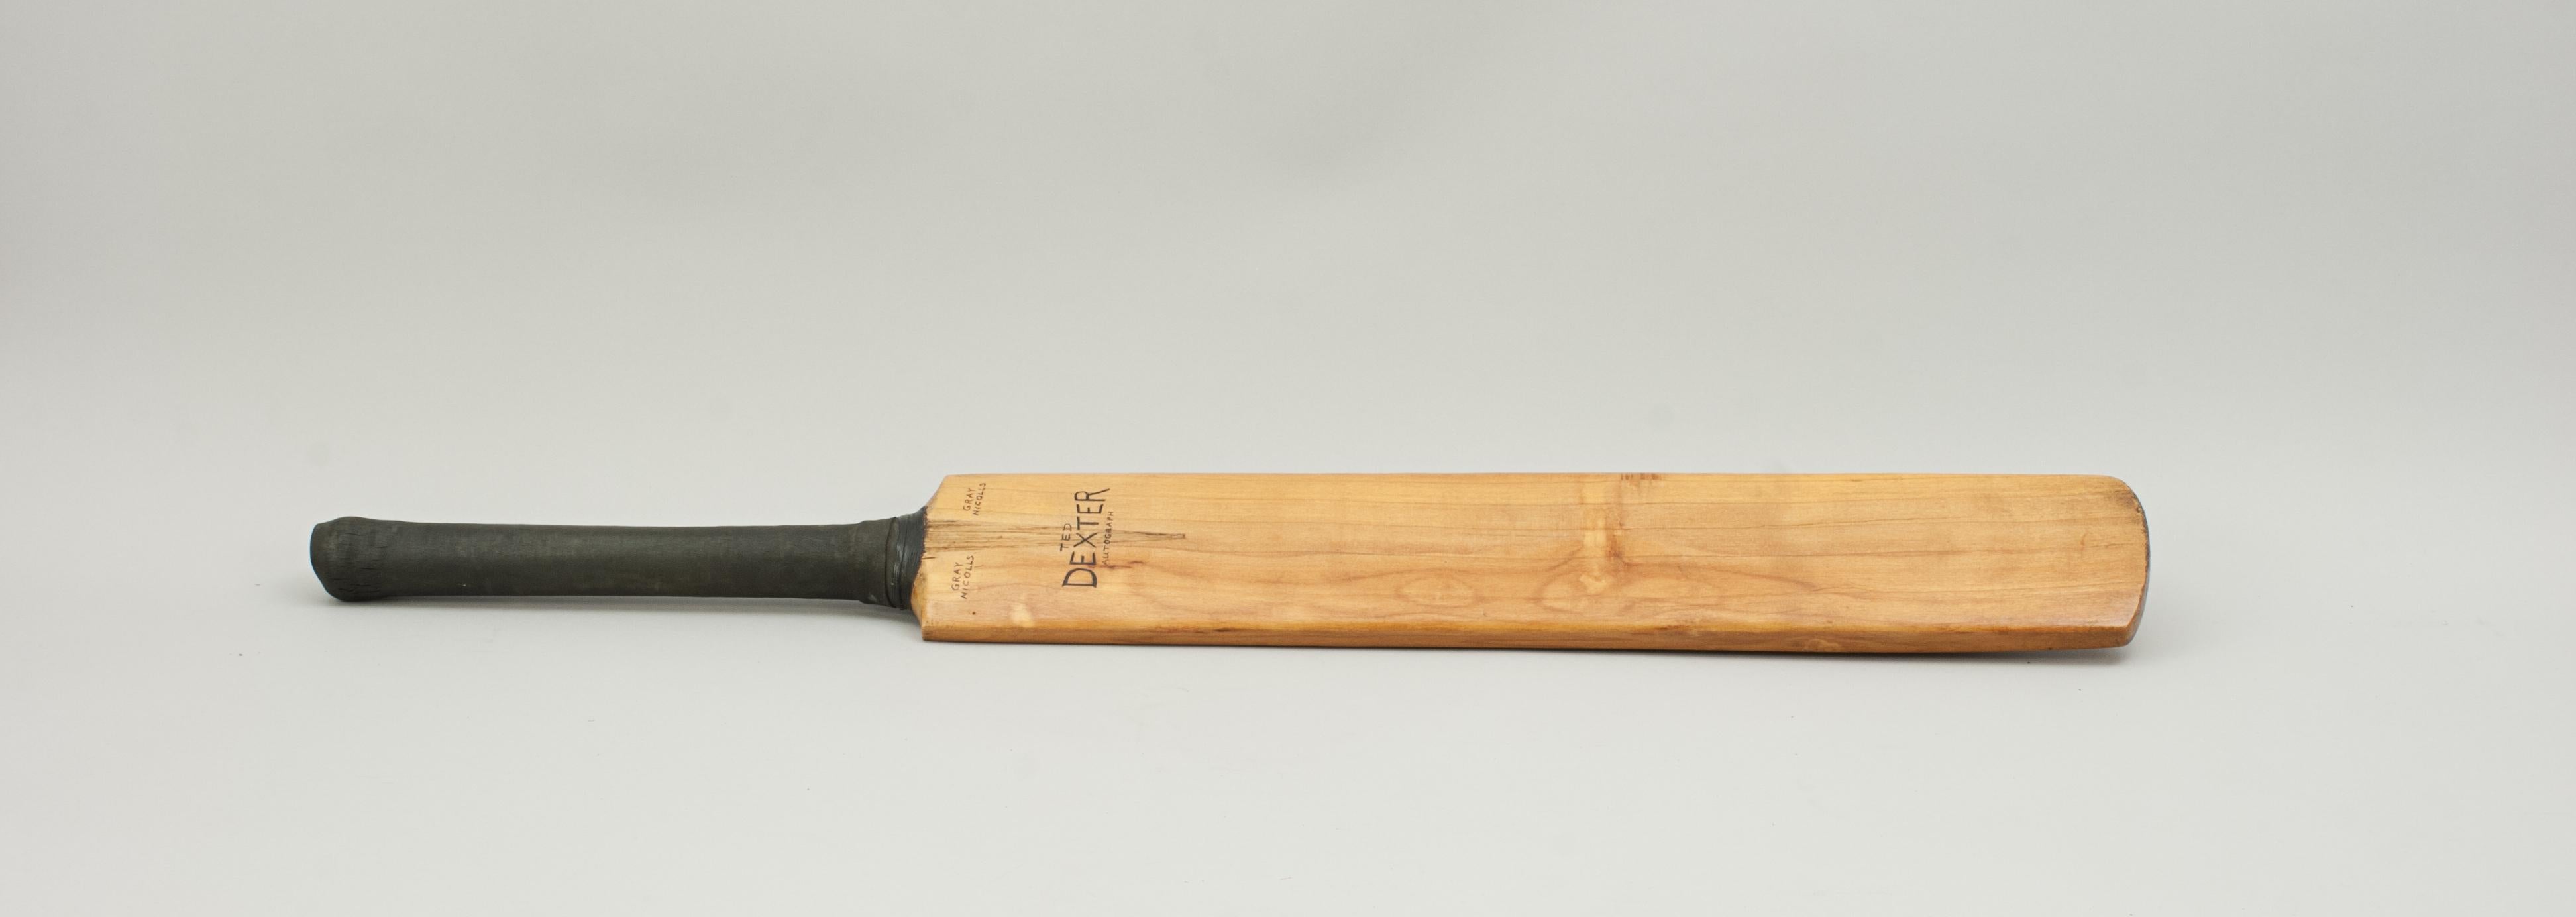 shaun of the dead cricket bat